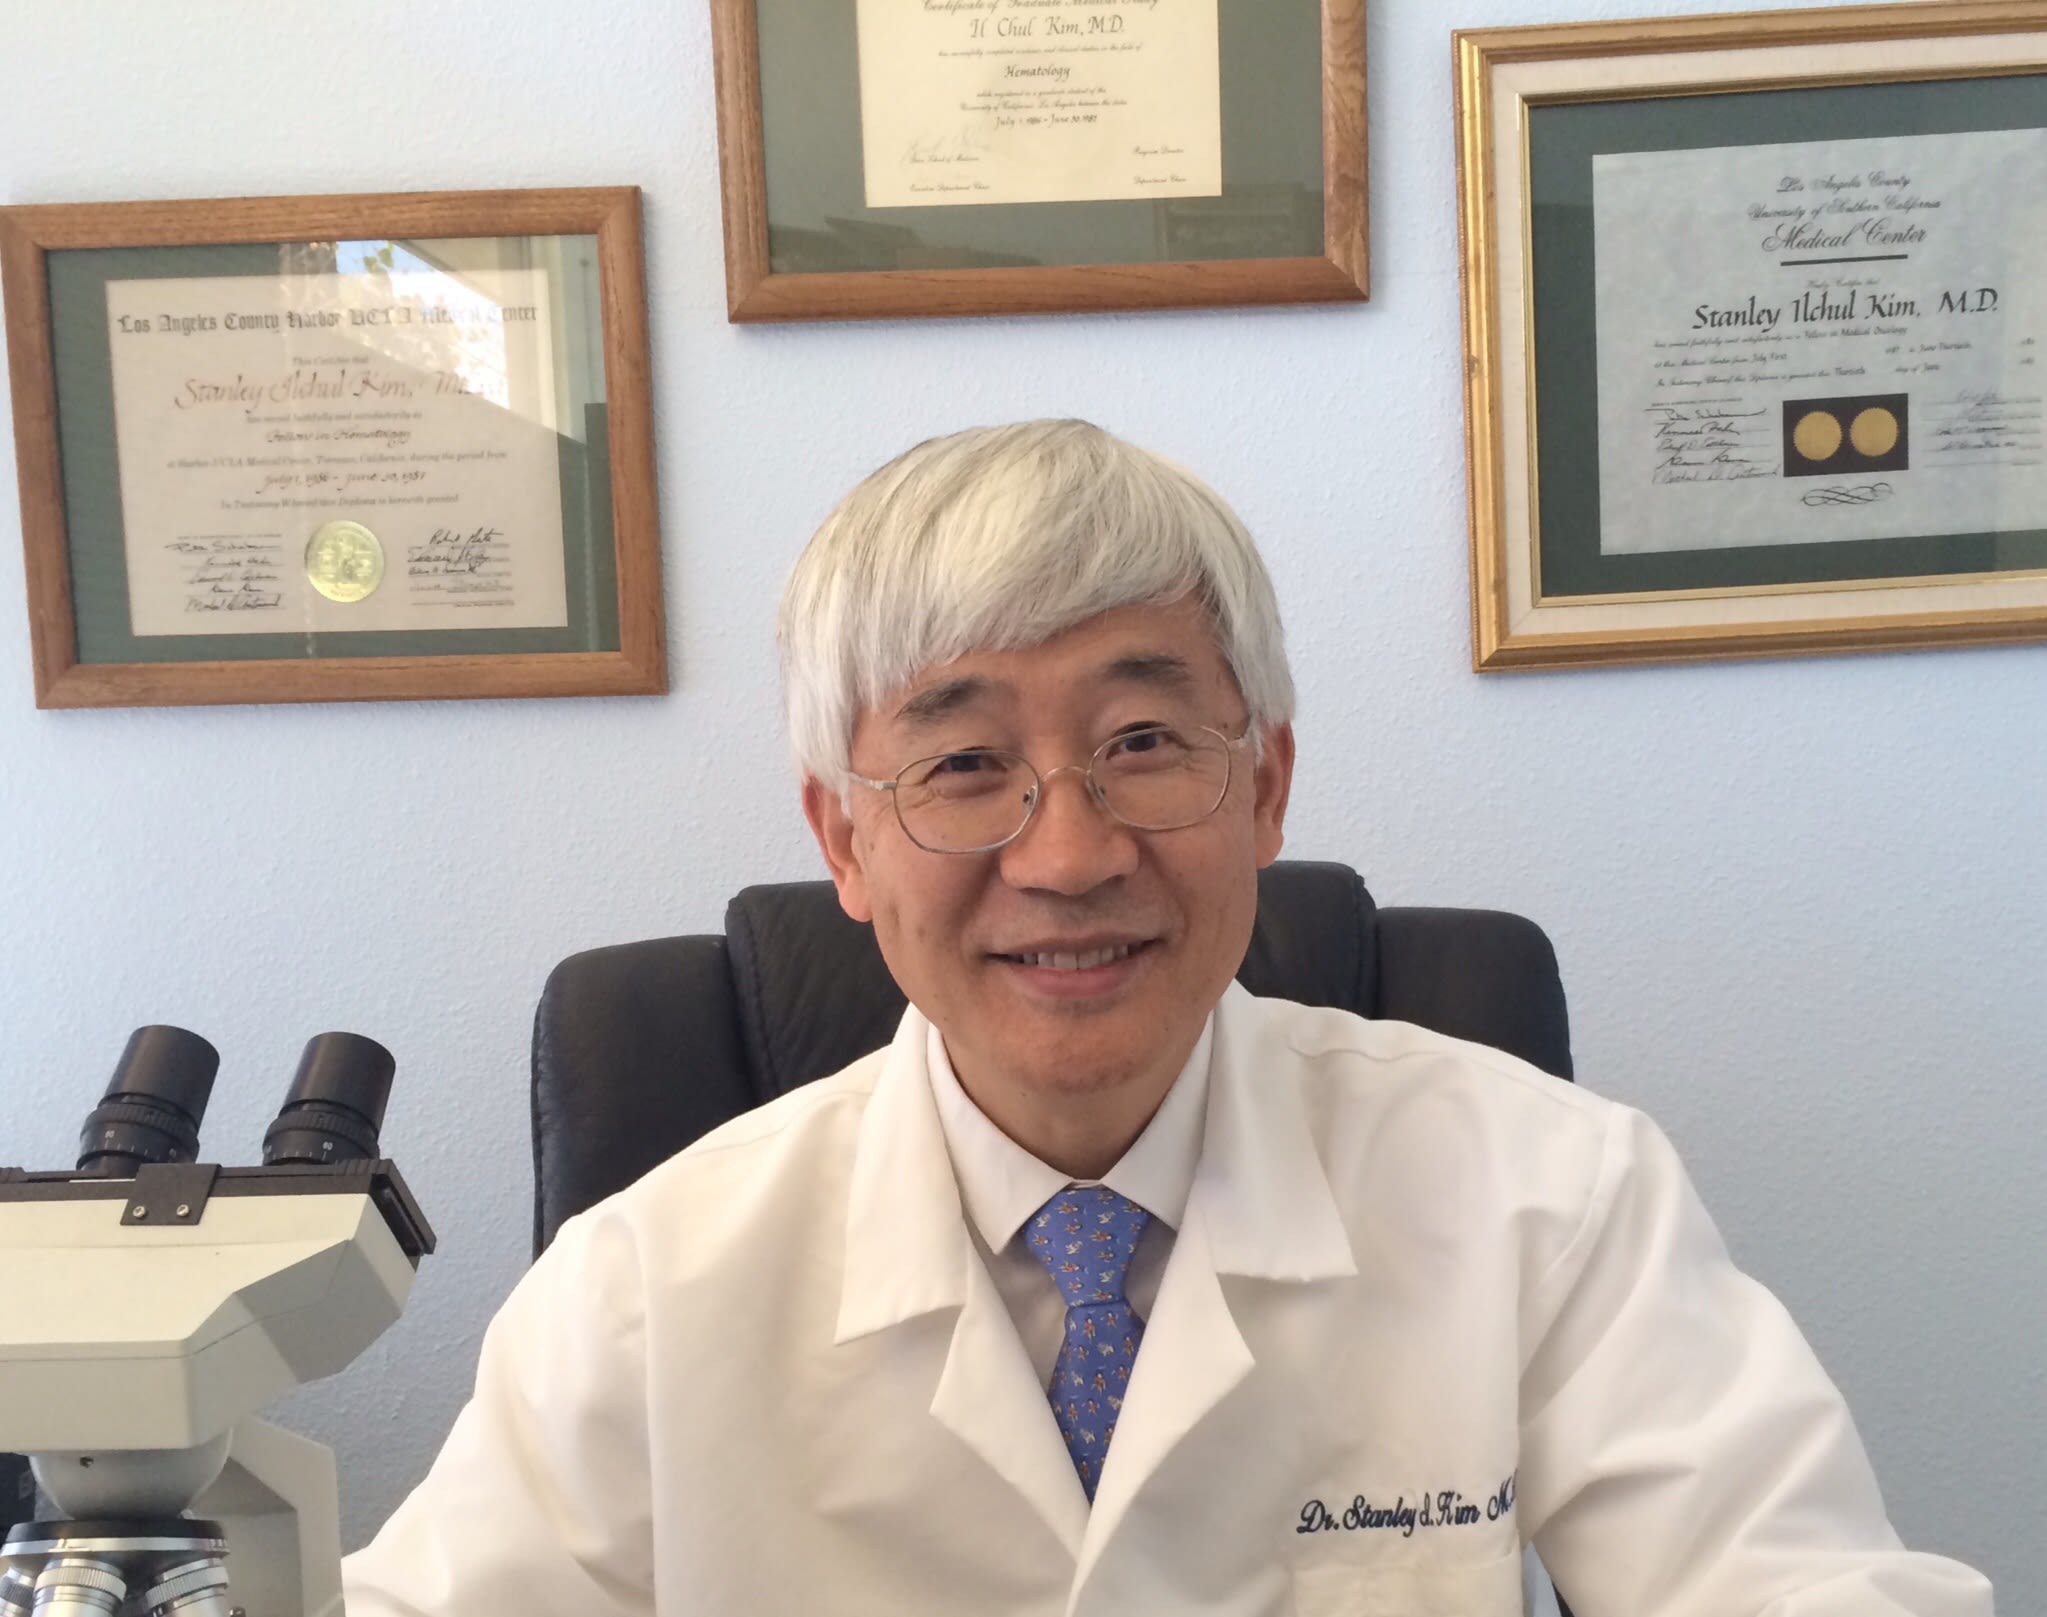 Dr. Stanley Ilchul Kim, MD